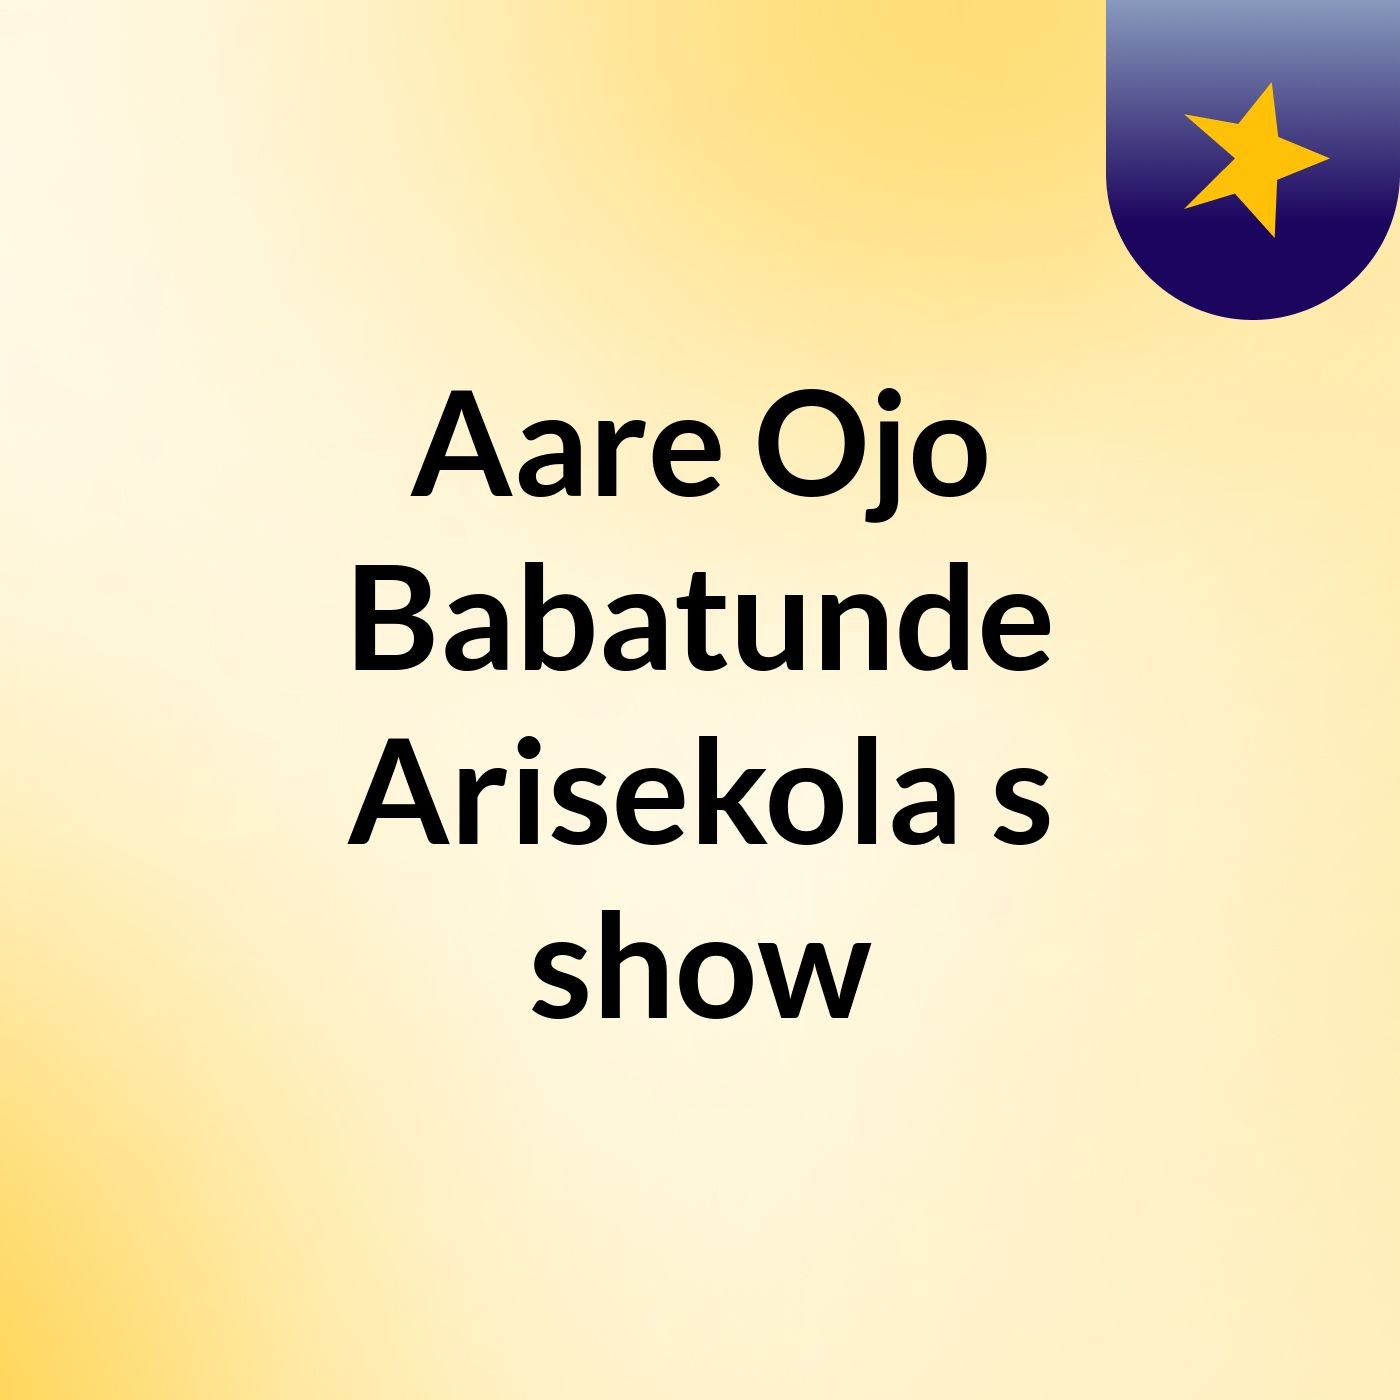 Aare Ojo Babatunde Arisekola's show